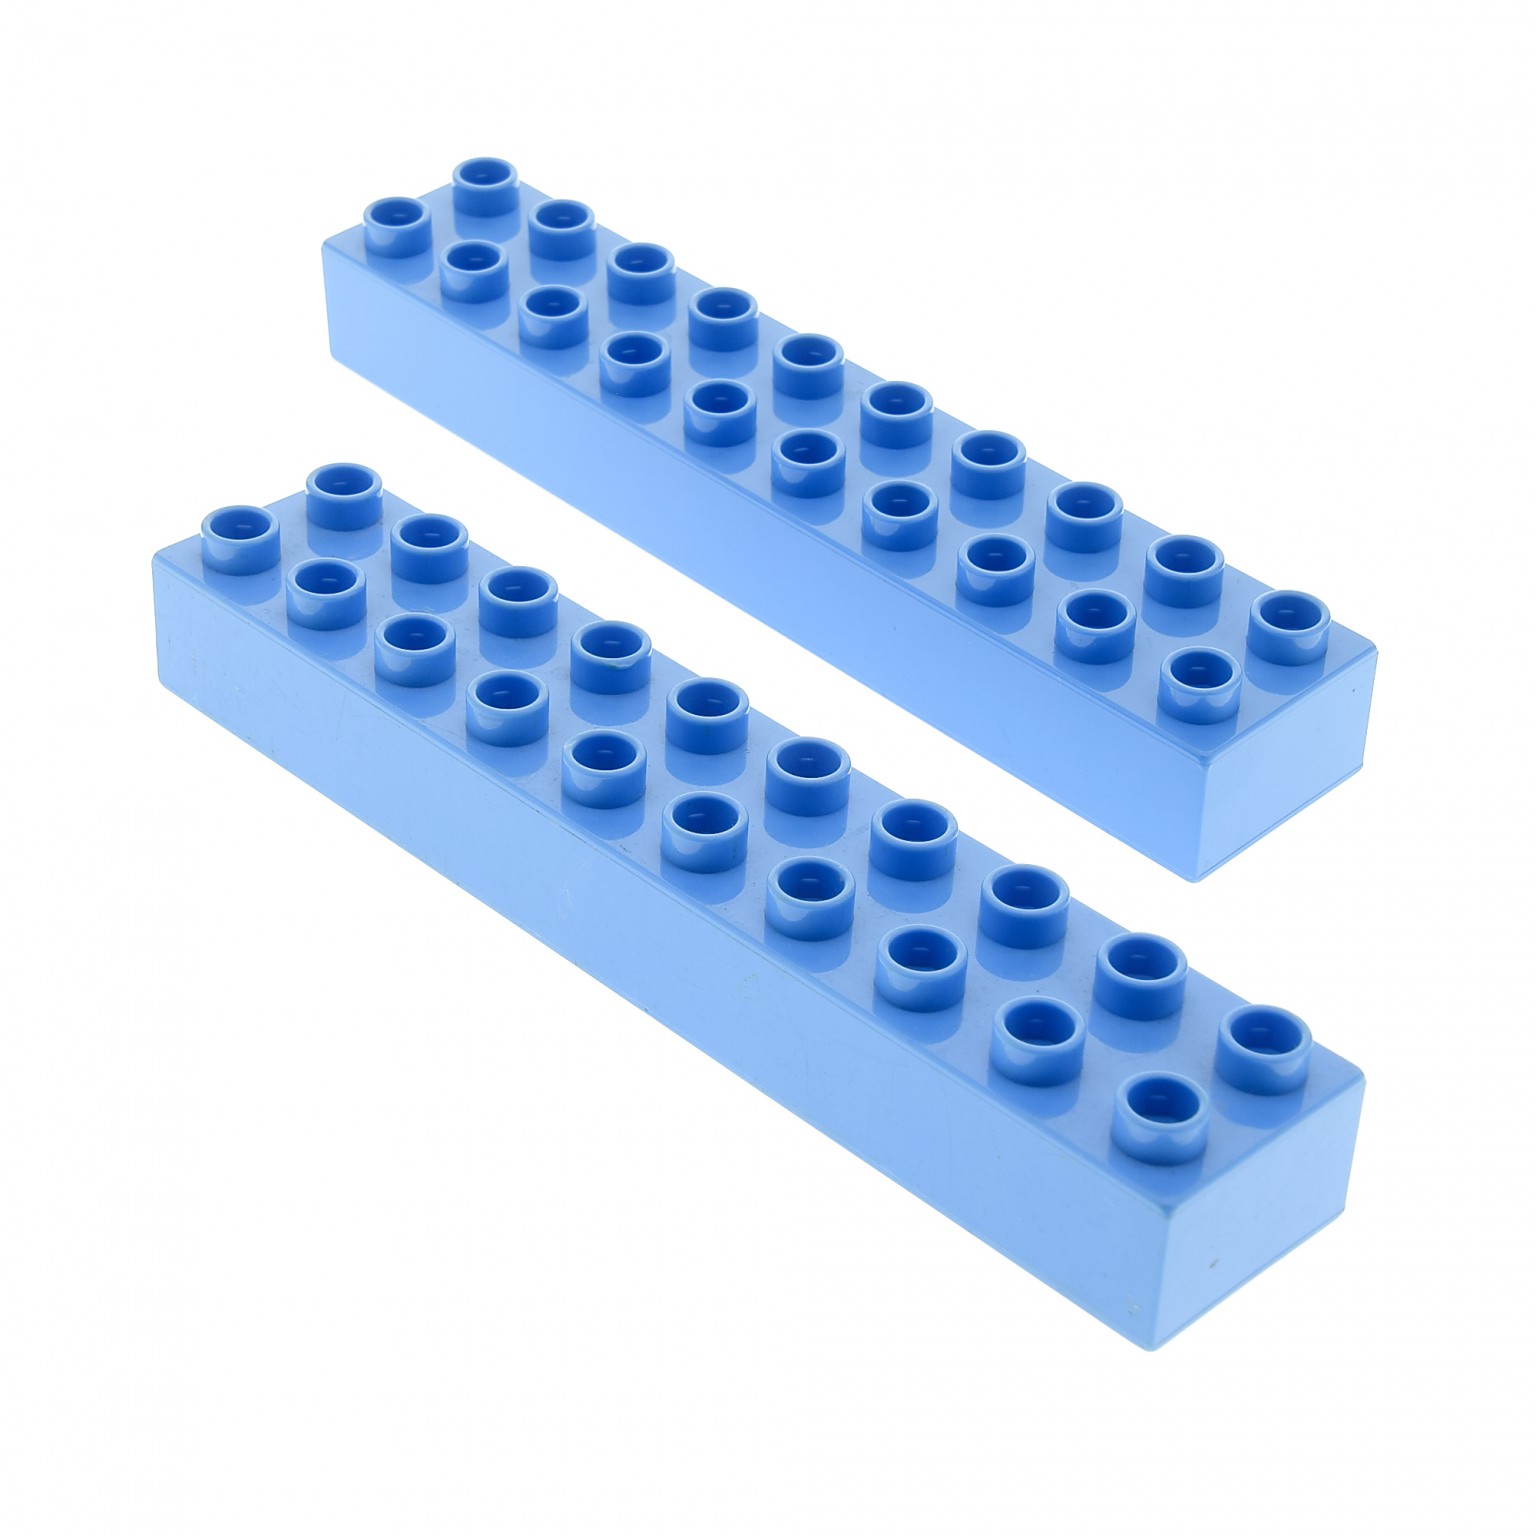 2x Lego Duplo Basic Construction Pierre Medium Hell Bleu 2x10 pour set 5609 2291 